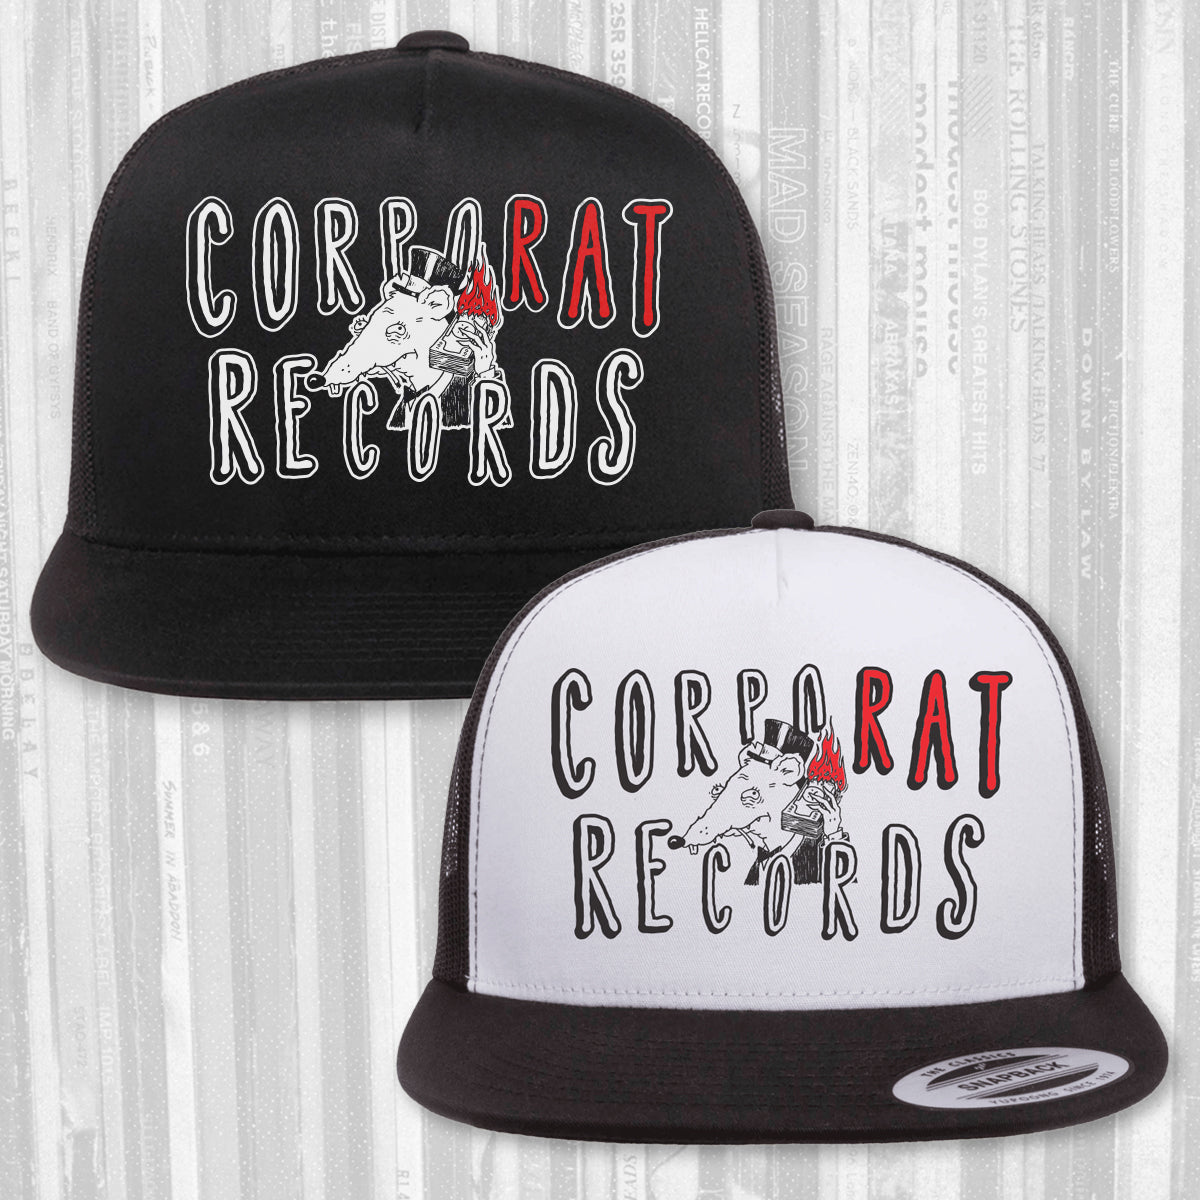 CorpoRAT Records - 5 panel snapback